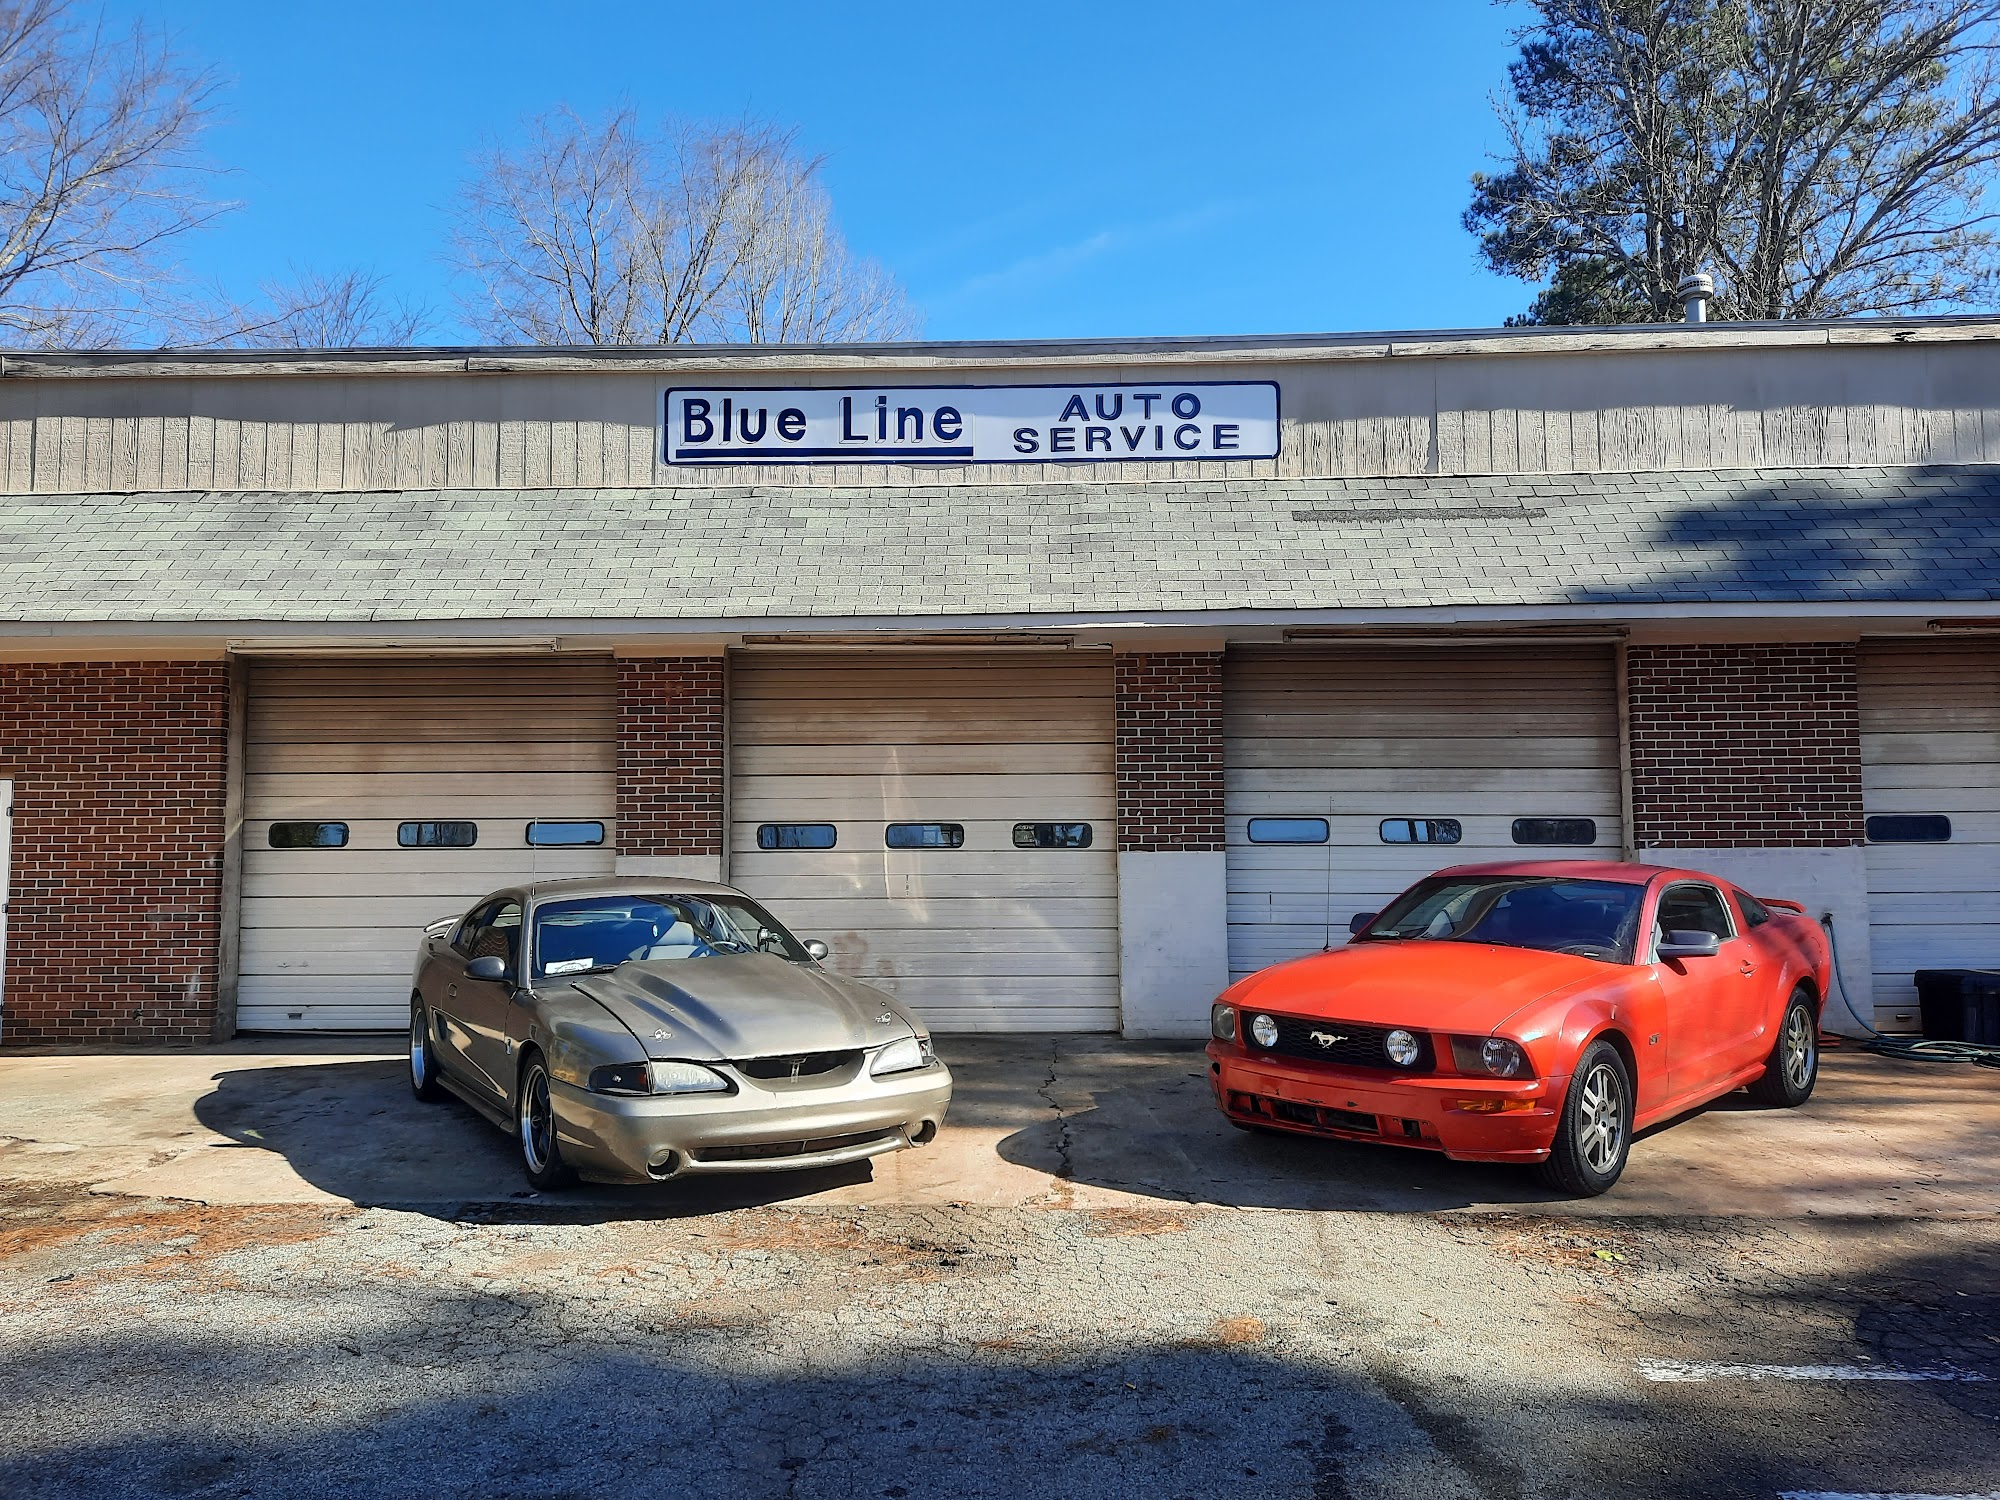 BlueLine Auto Service 159 Old Glenwood Springs Rd, Eatonton Georgia 31024